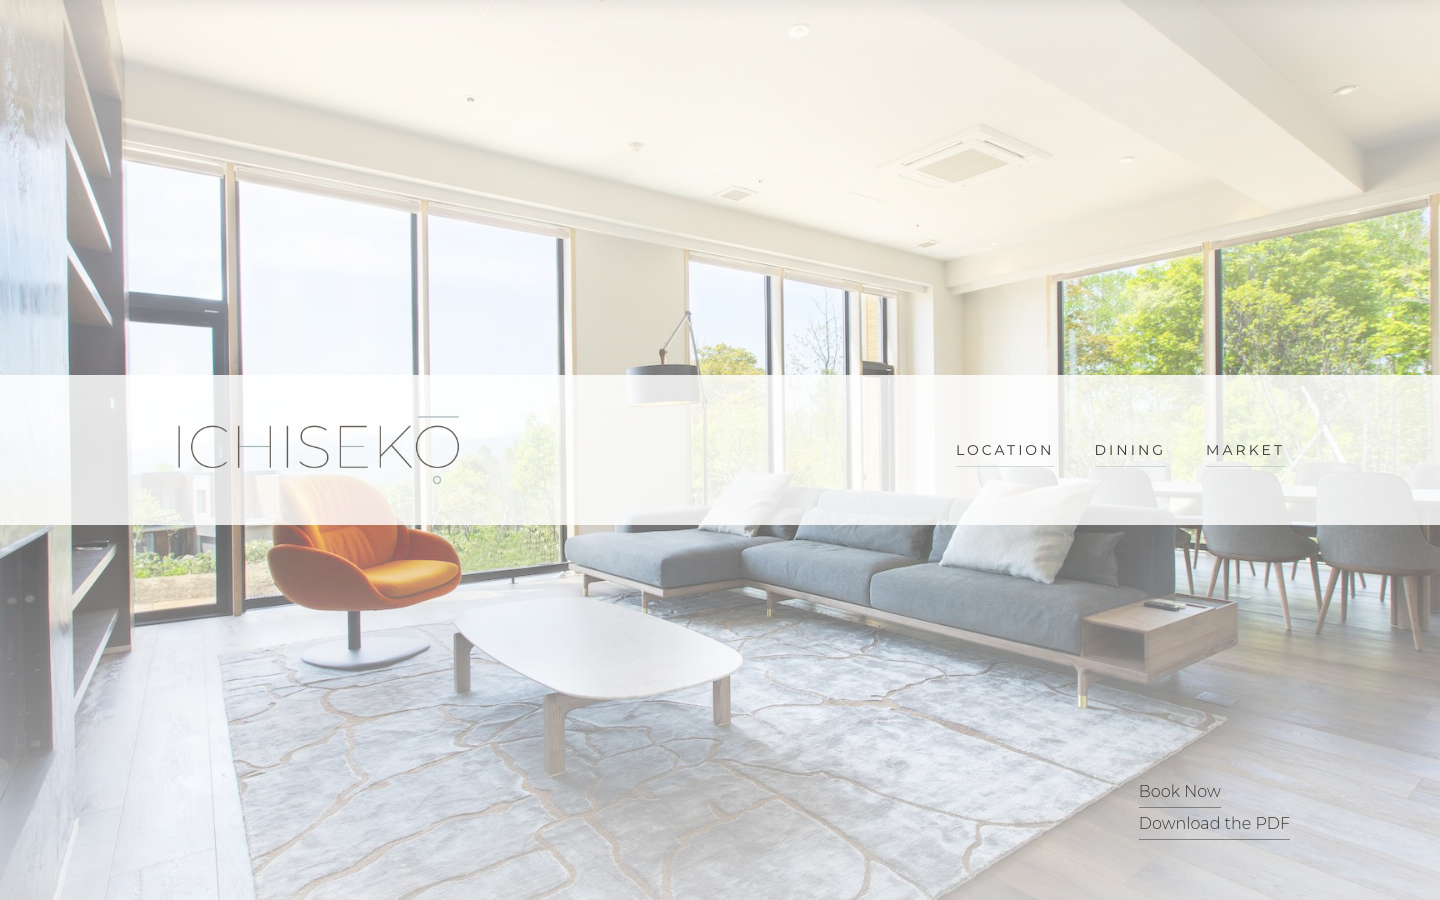 ichiseko-apartments-cover-1-designed-by-ashwin-anandani